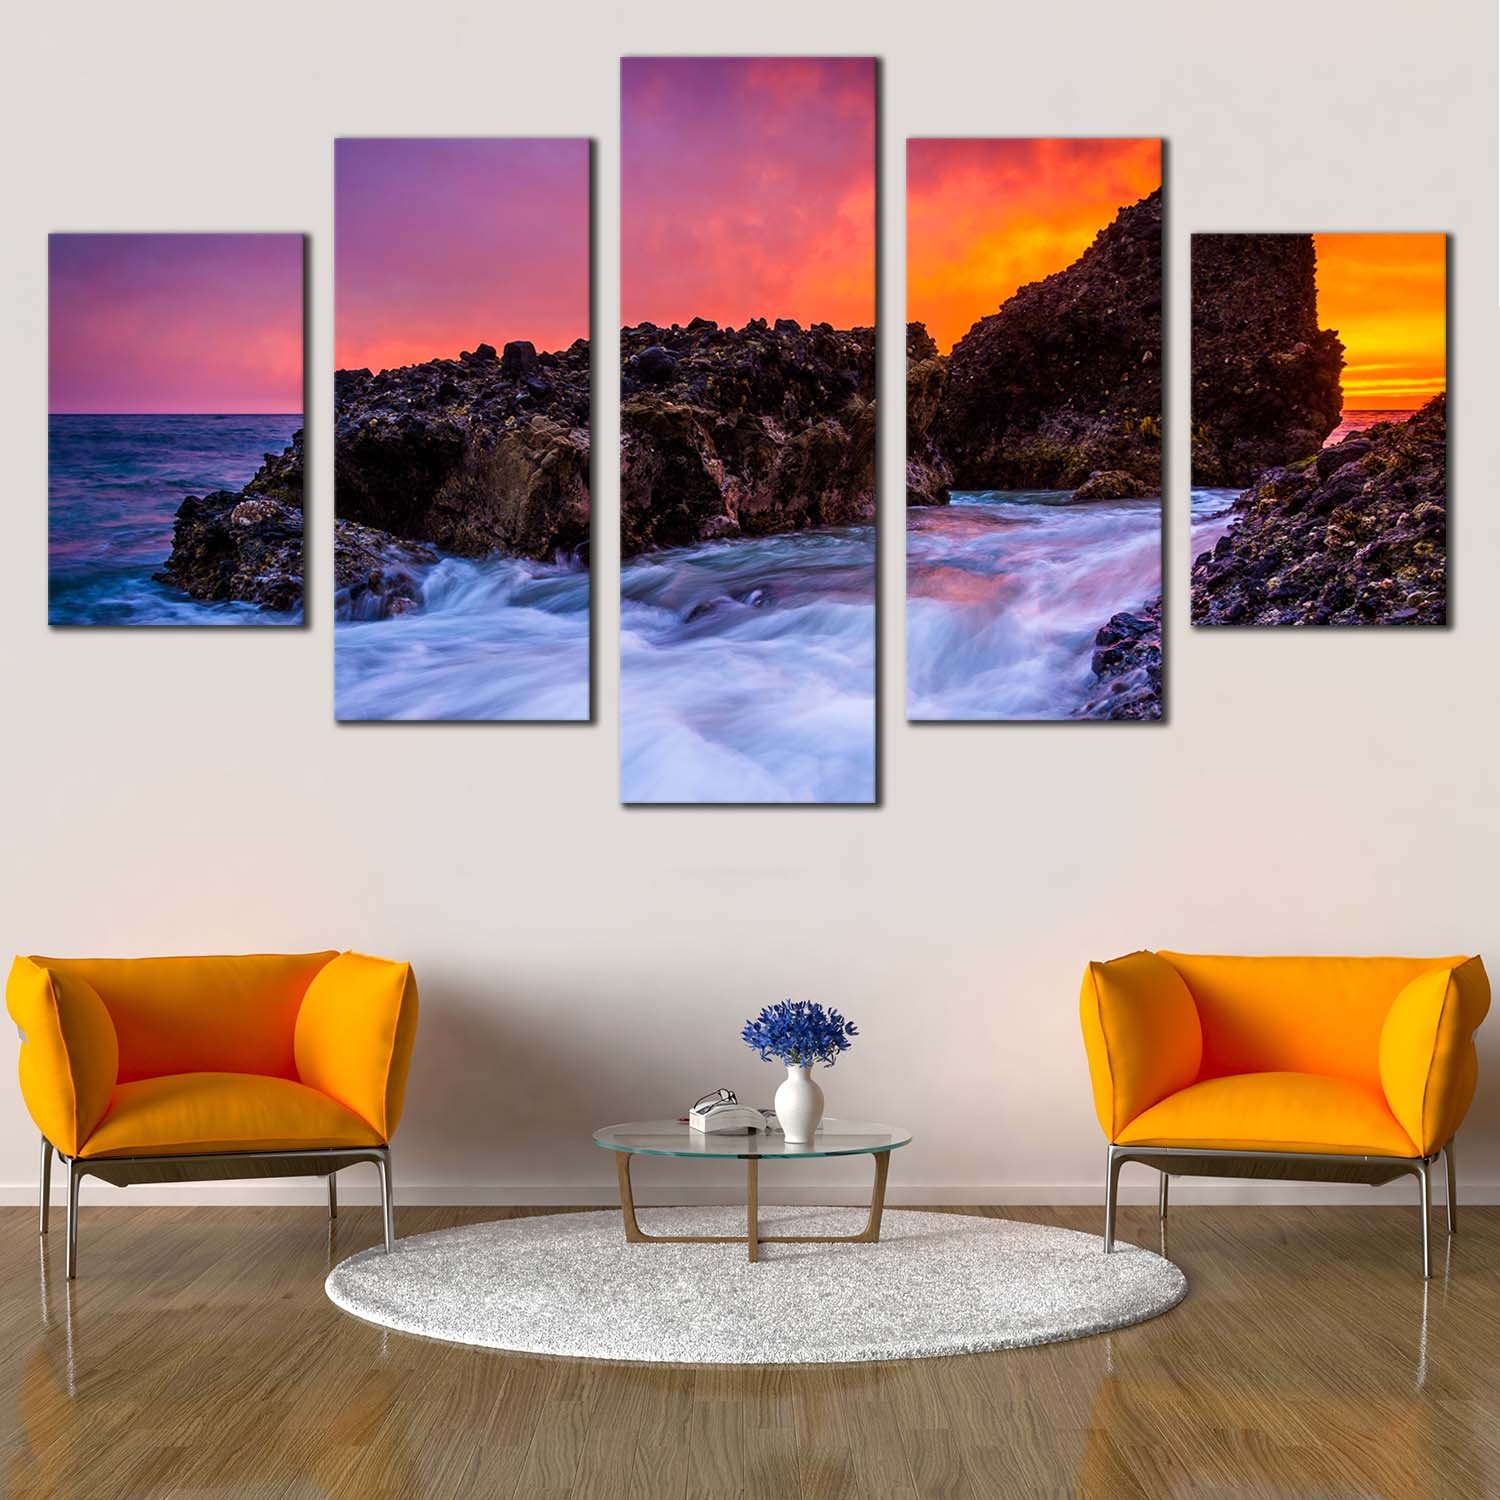 California Ocean , Orange Laguna Beach Sunset , Blue Waves Rocks Ocean Artwork 5 Piece Canvas Art Wall Decor - Canvas Prints Artwork